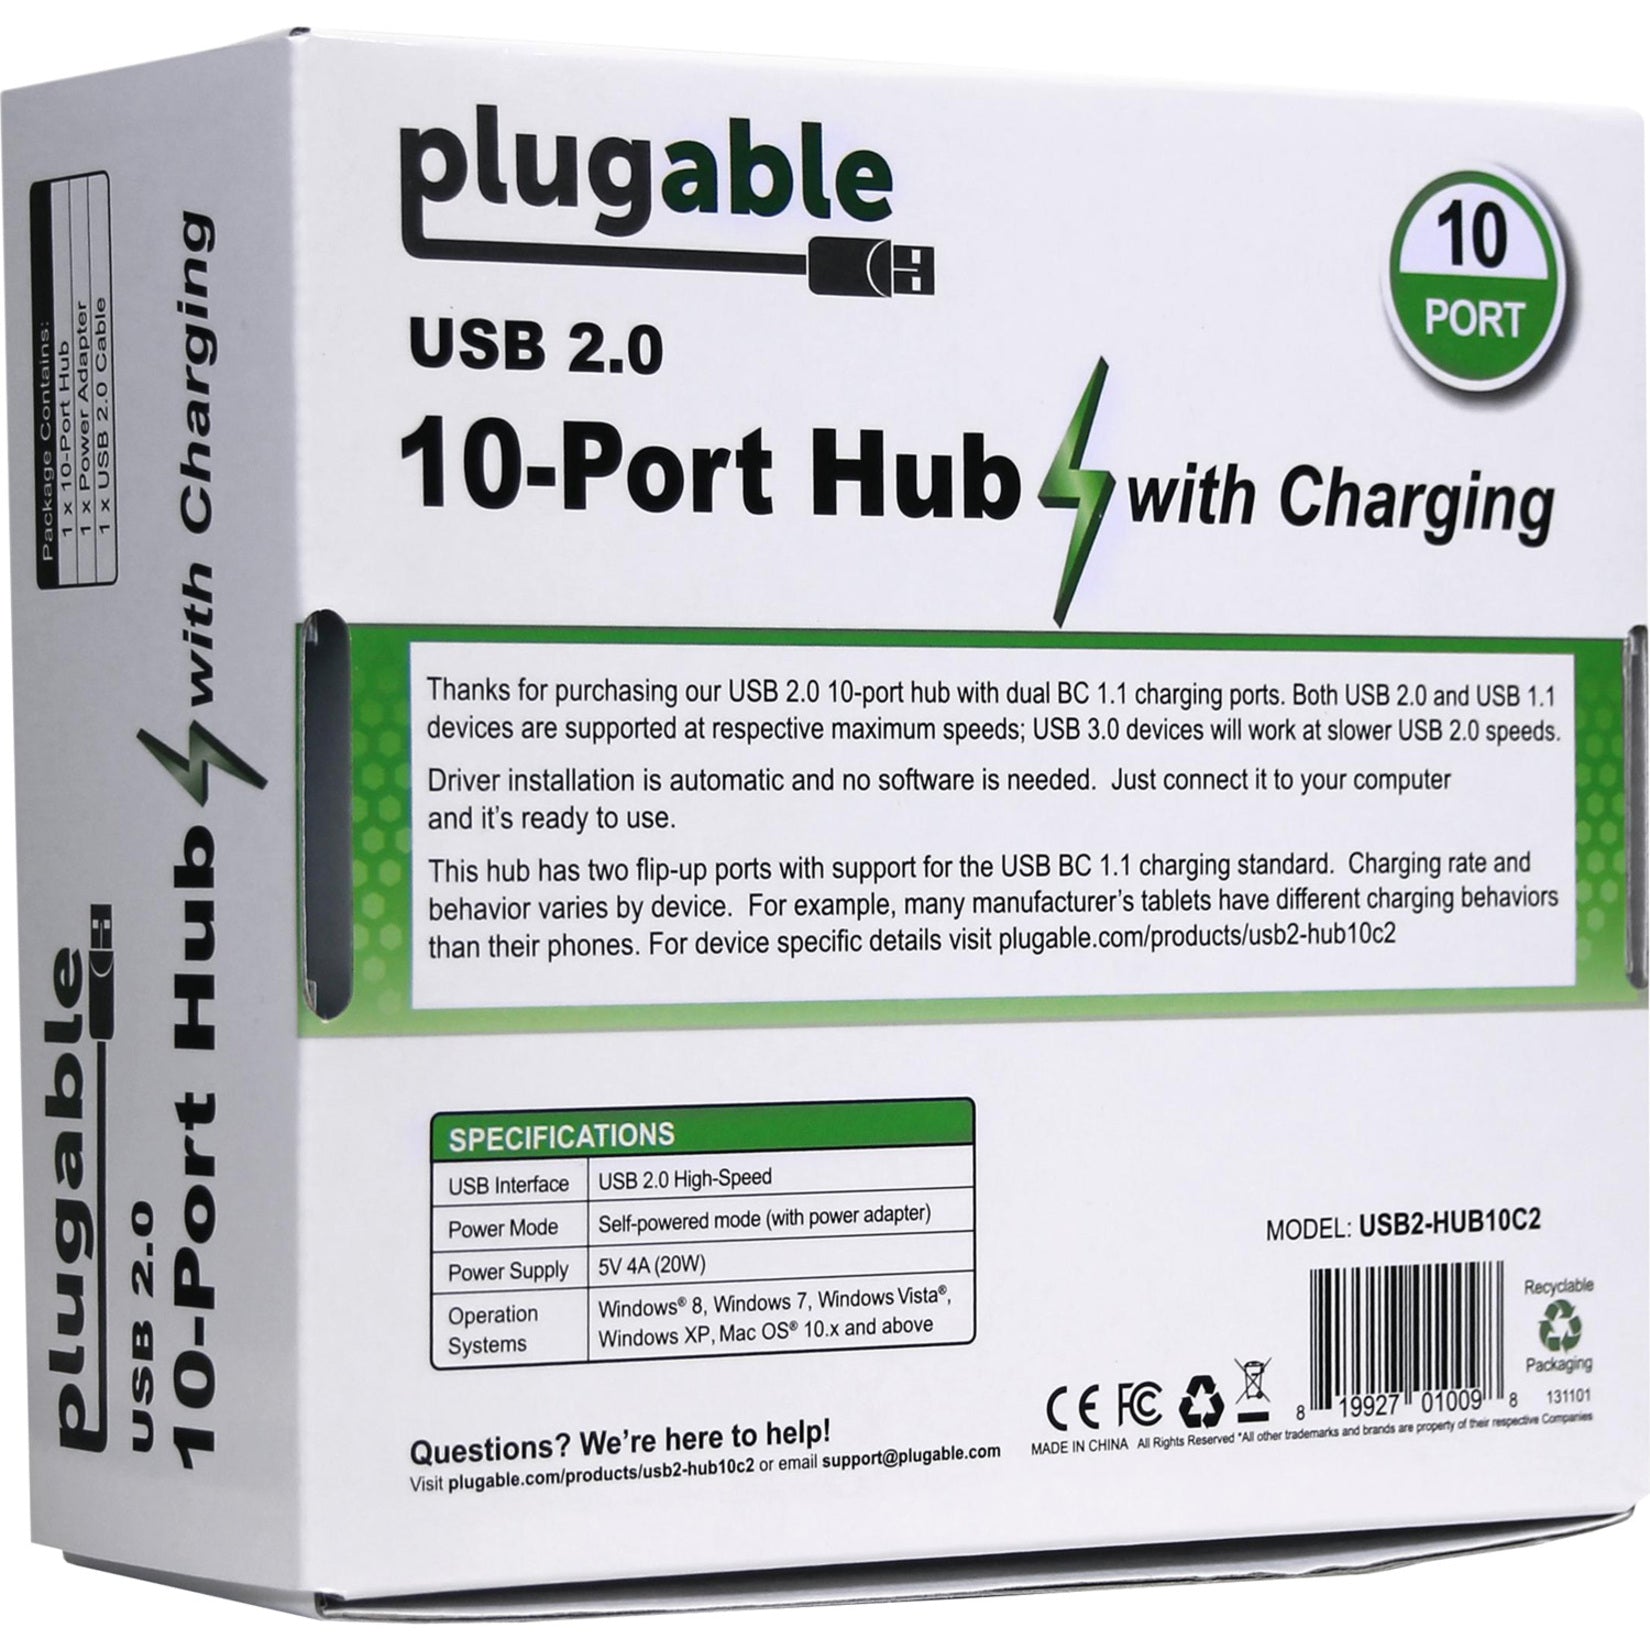 Plugable USB2-HUB10C2 USB 2.0 10-PORT HUB WITH 20W POWER ADAPTER, 10 Ports, PC/Mac/Linux Compatible